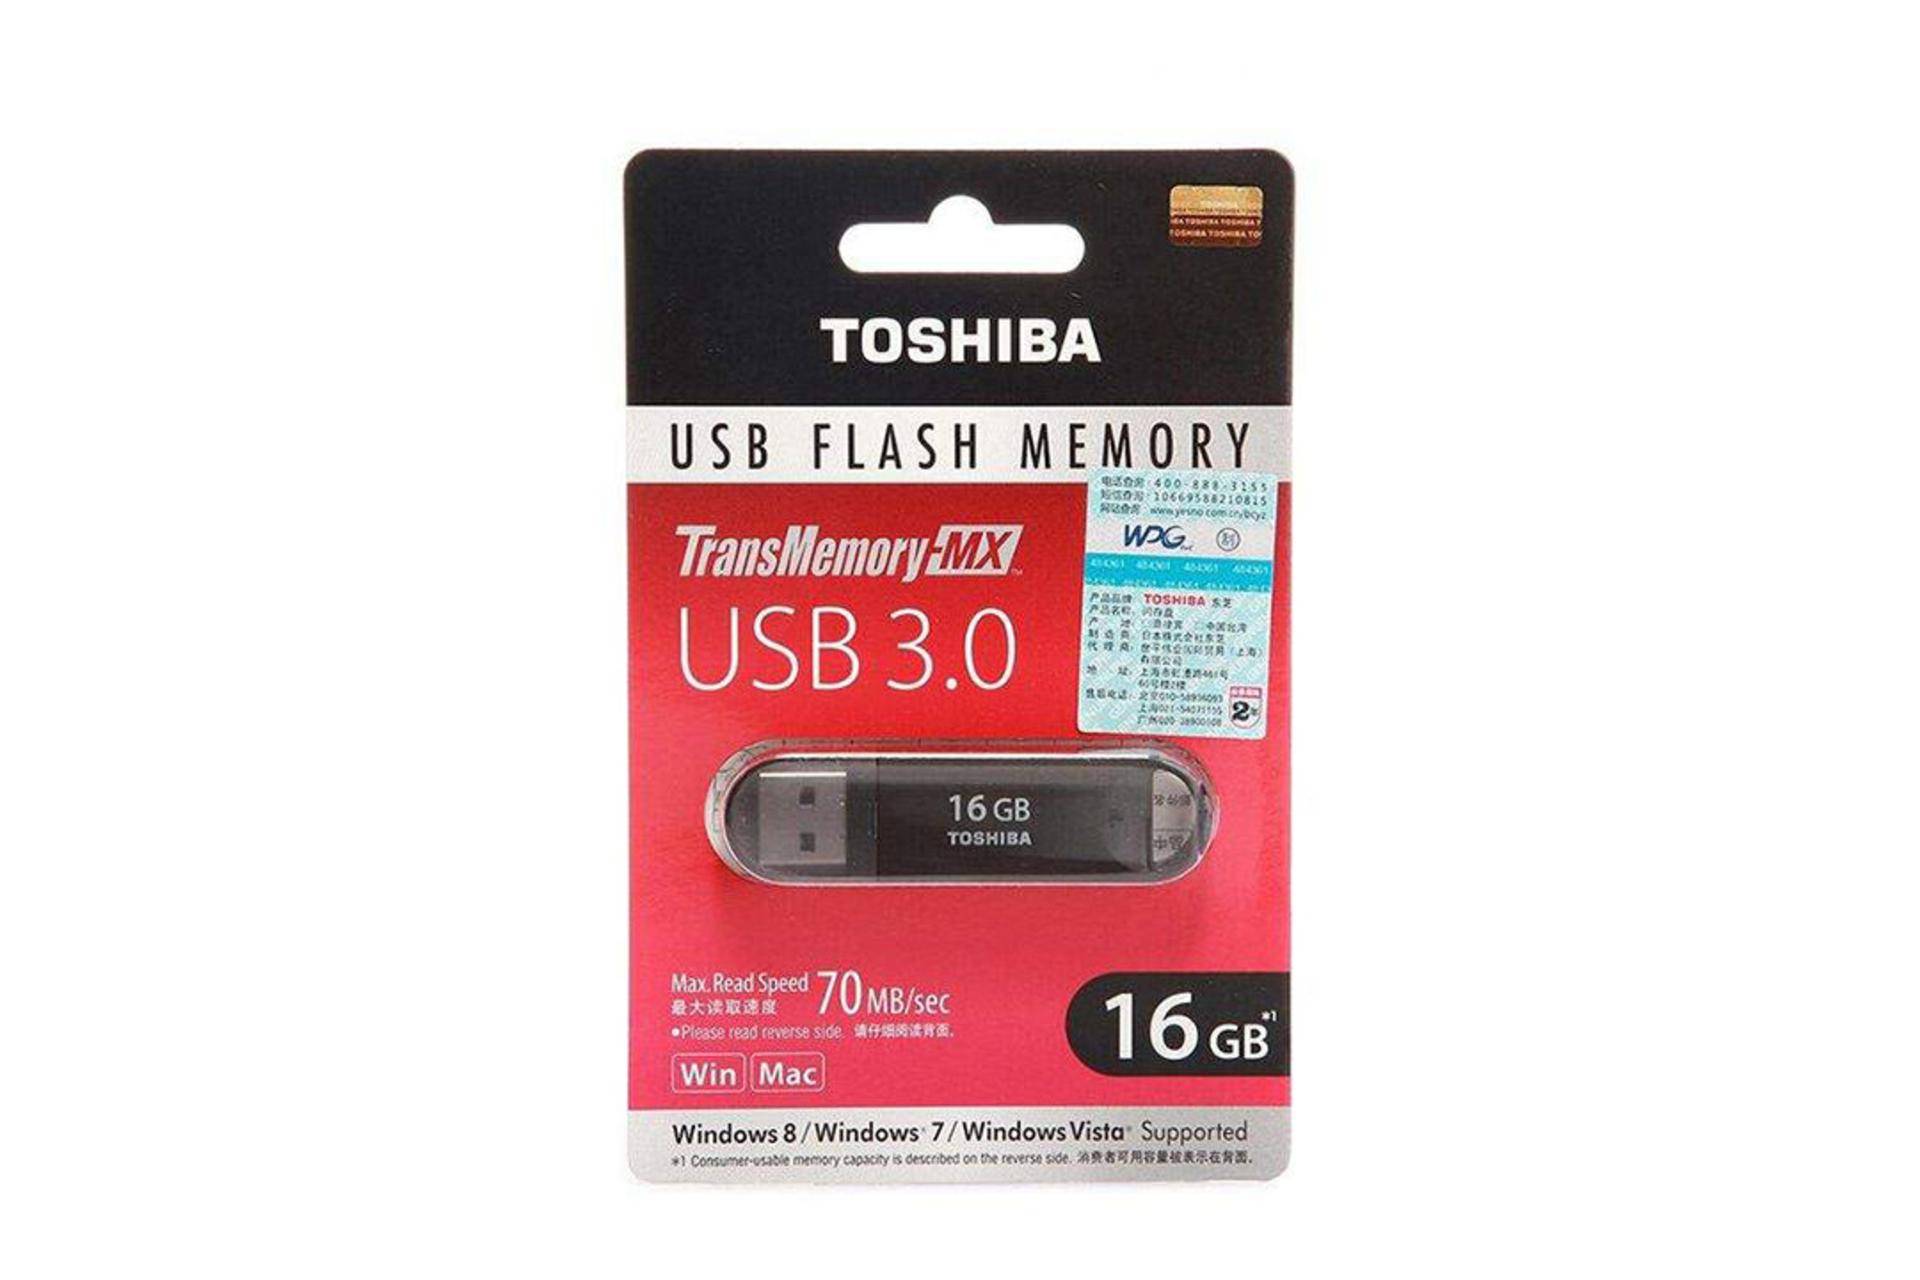 Toshiba TRANS V3SZK 16GB